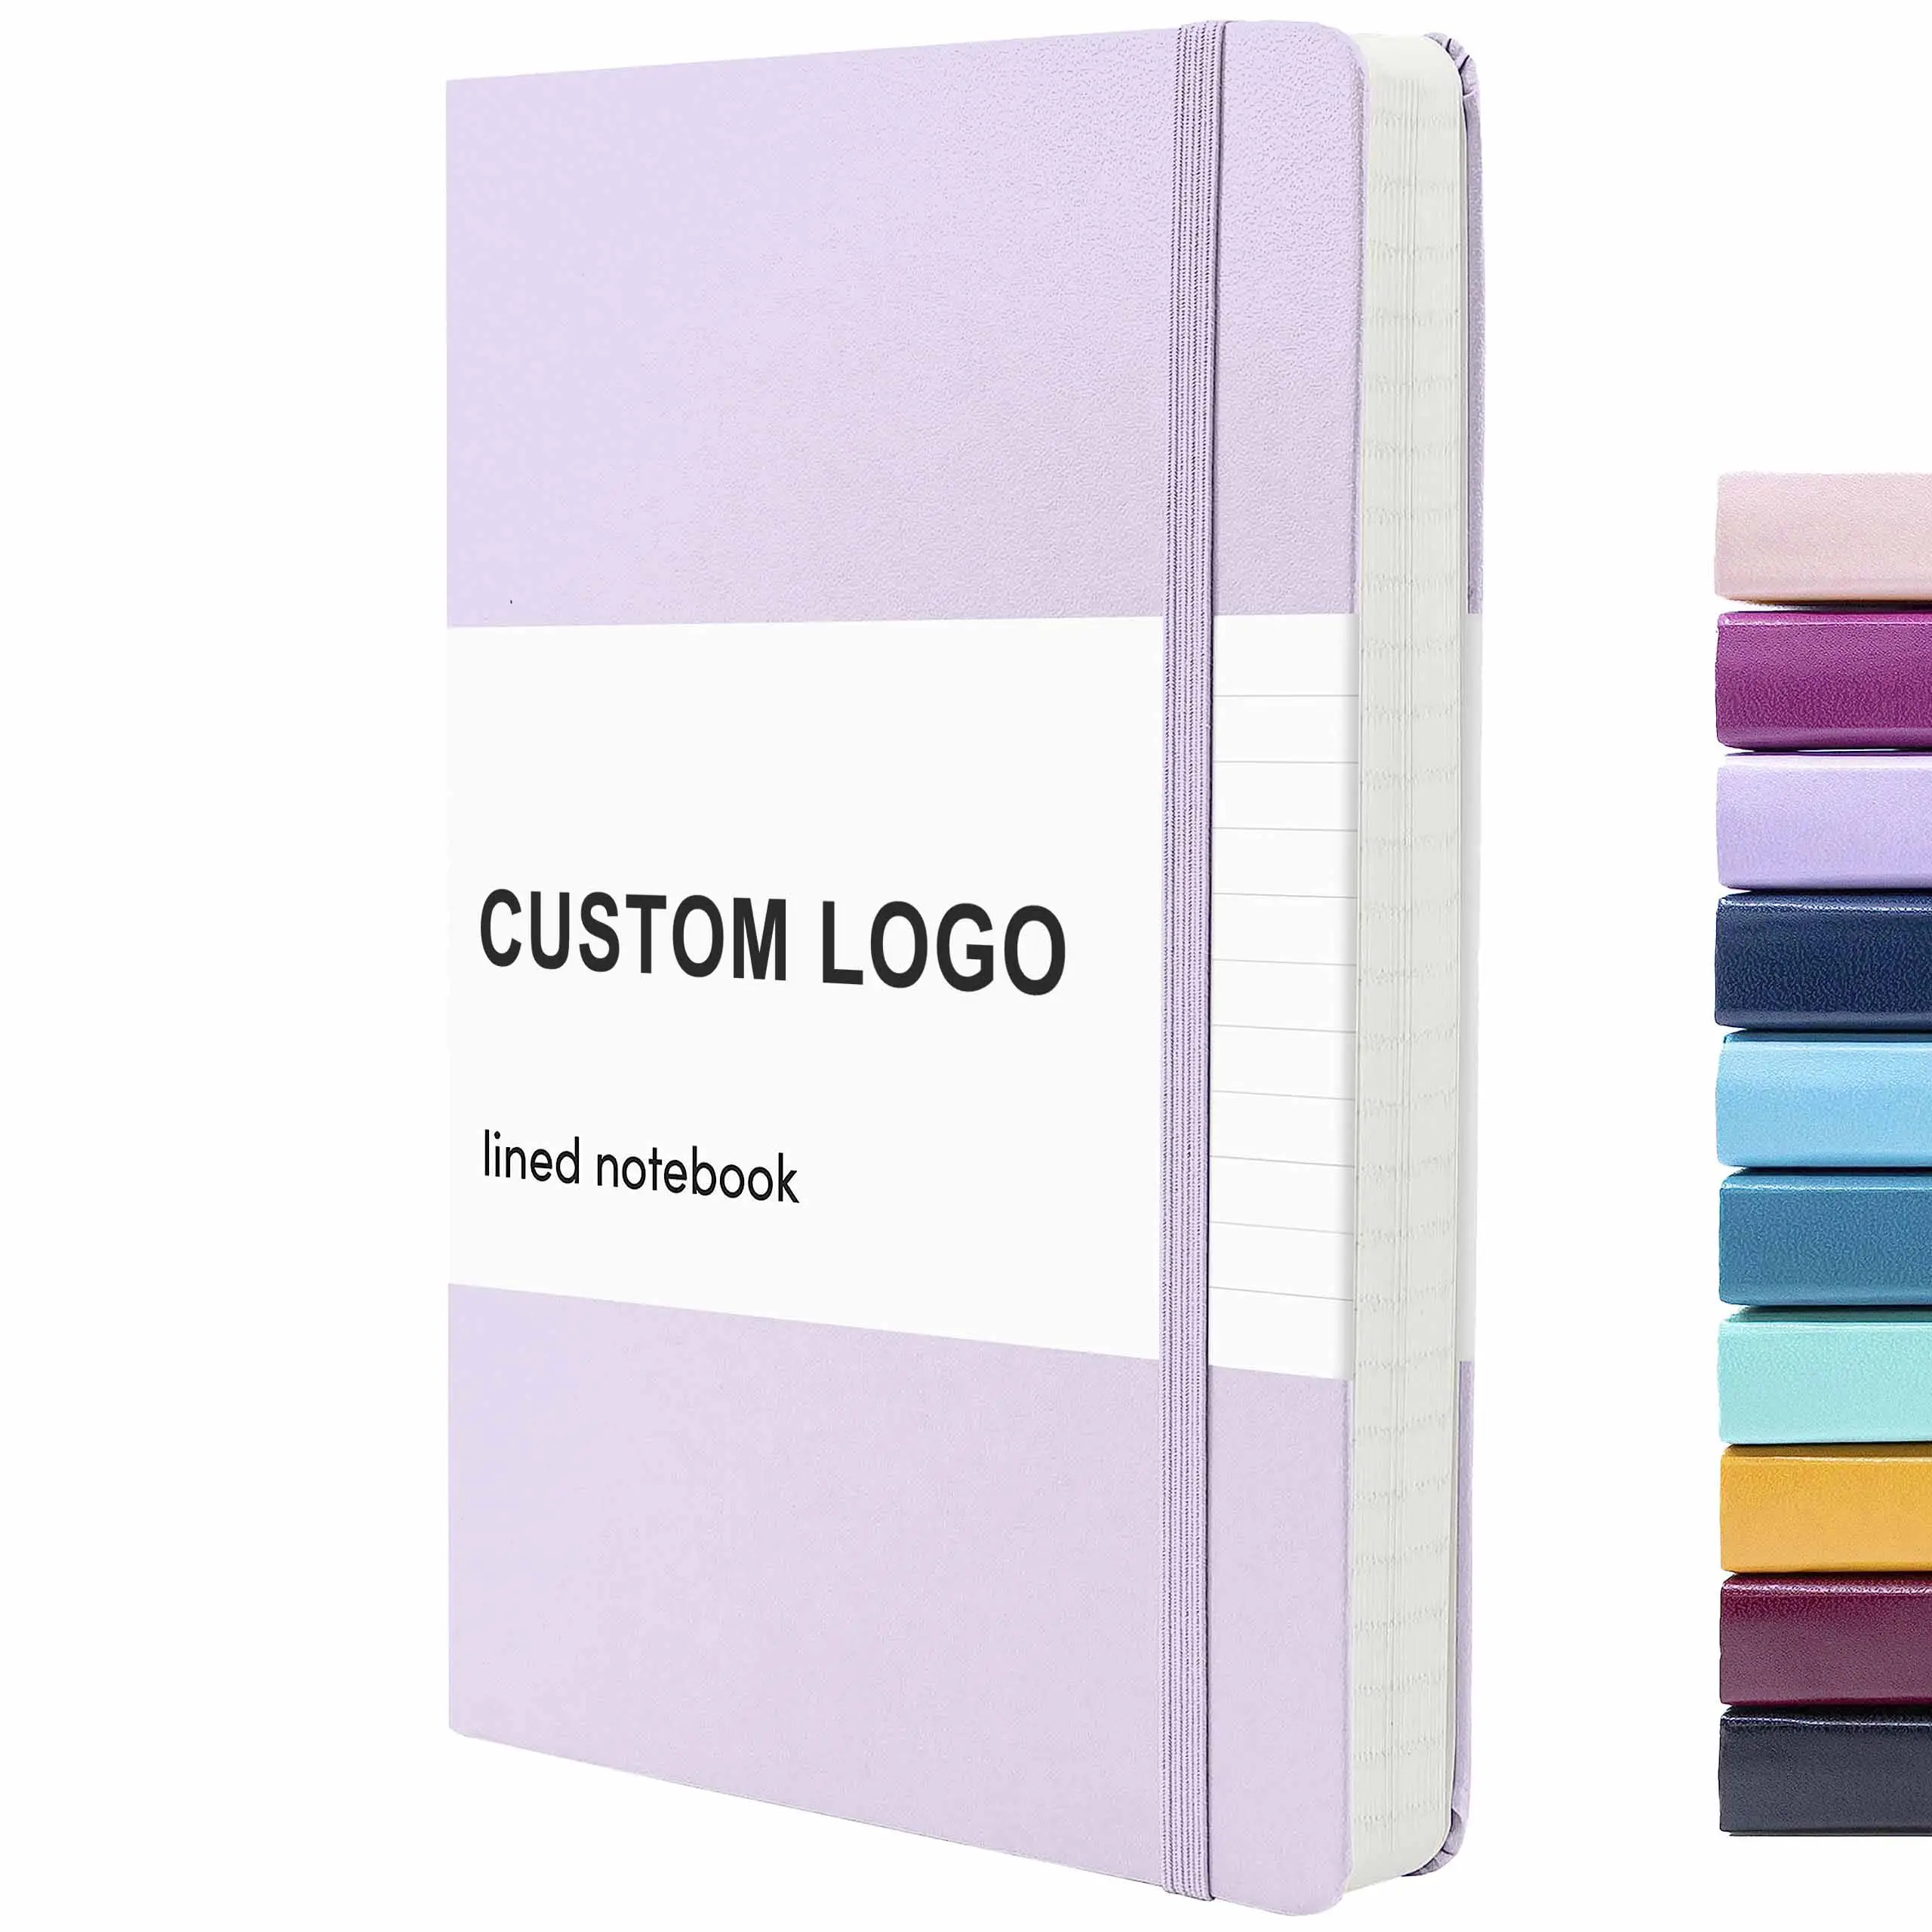 Custom Logo College Lined bergaris Hardcover A5 jurnal PU kulit Notebook